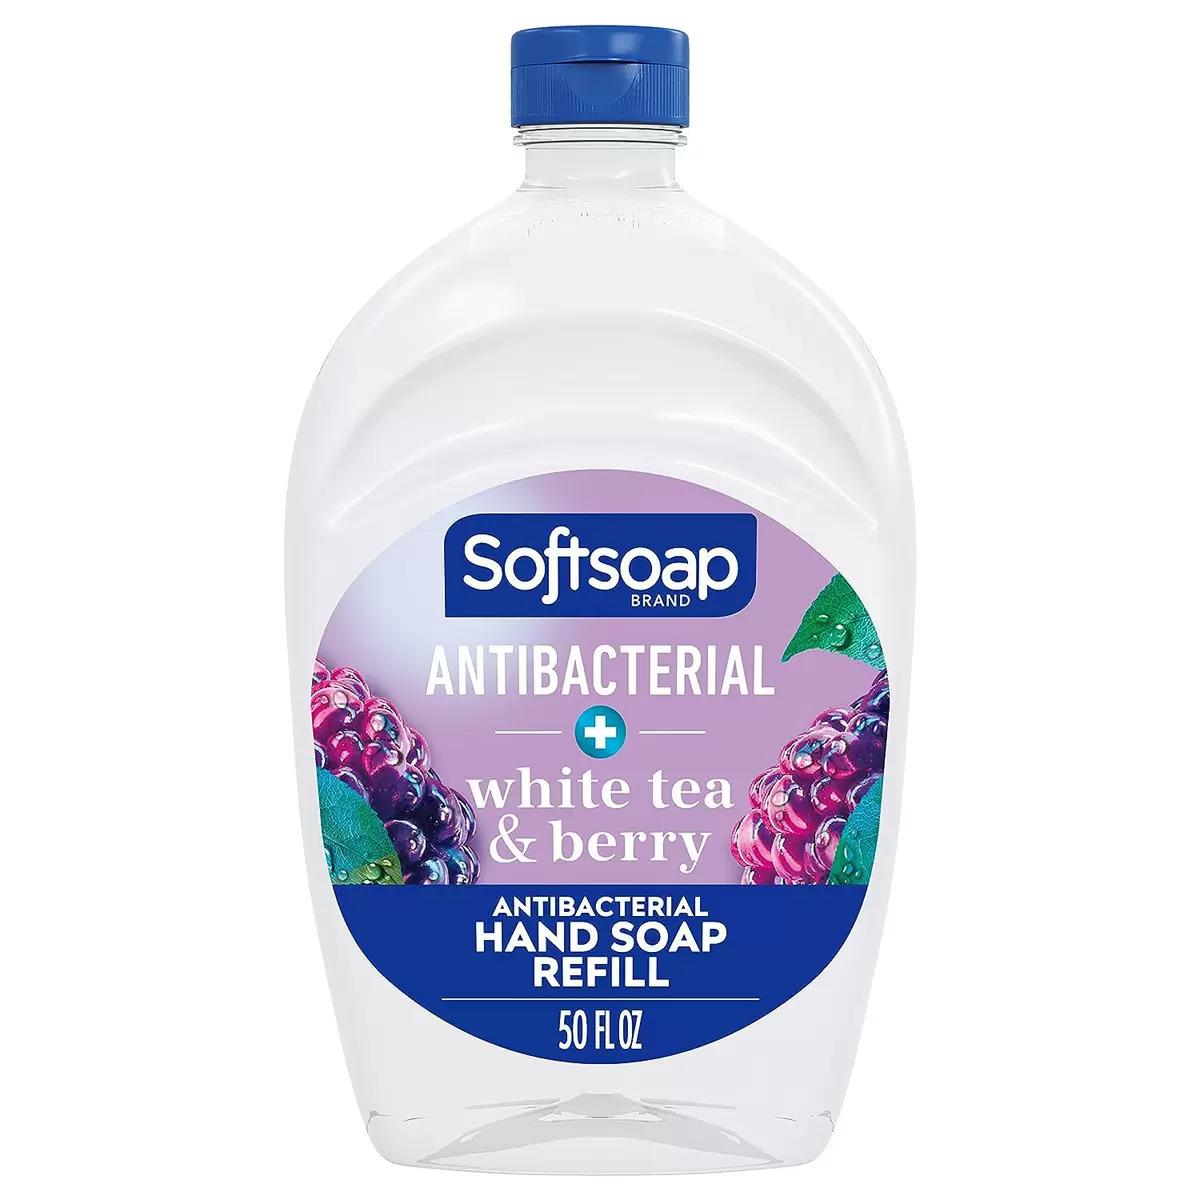 Softsoap Antibacterial Liquid Hand Soap Refill 50oz for $4.79